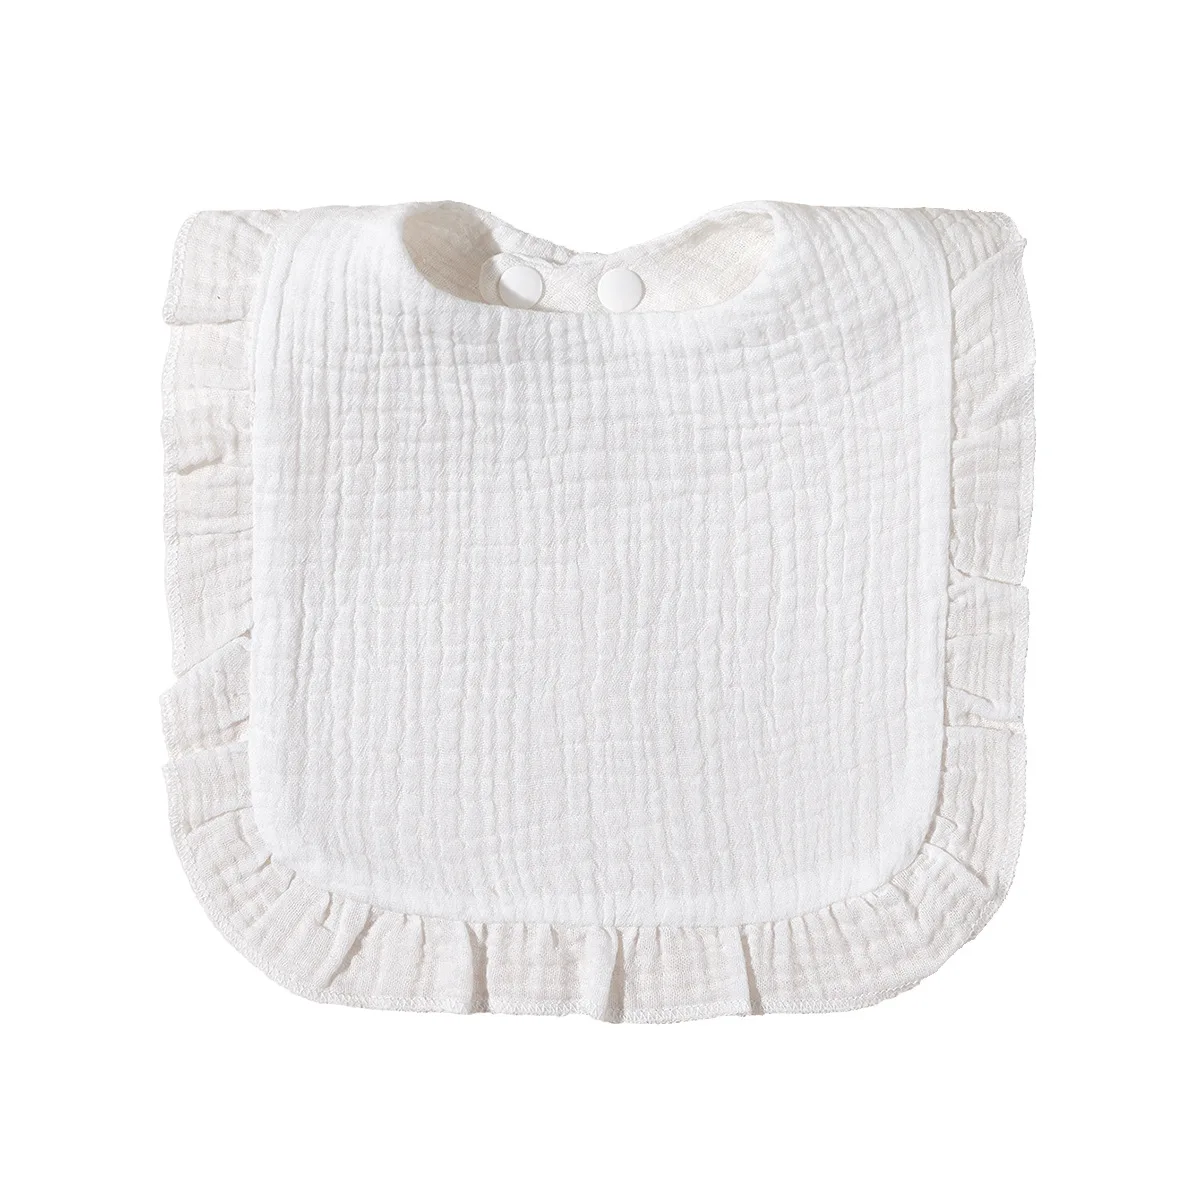 Soft new infant drool bandana bibs newborn blank 100% cotton muslin toddler white ruffle bib for baby girl feeding bib